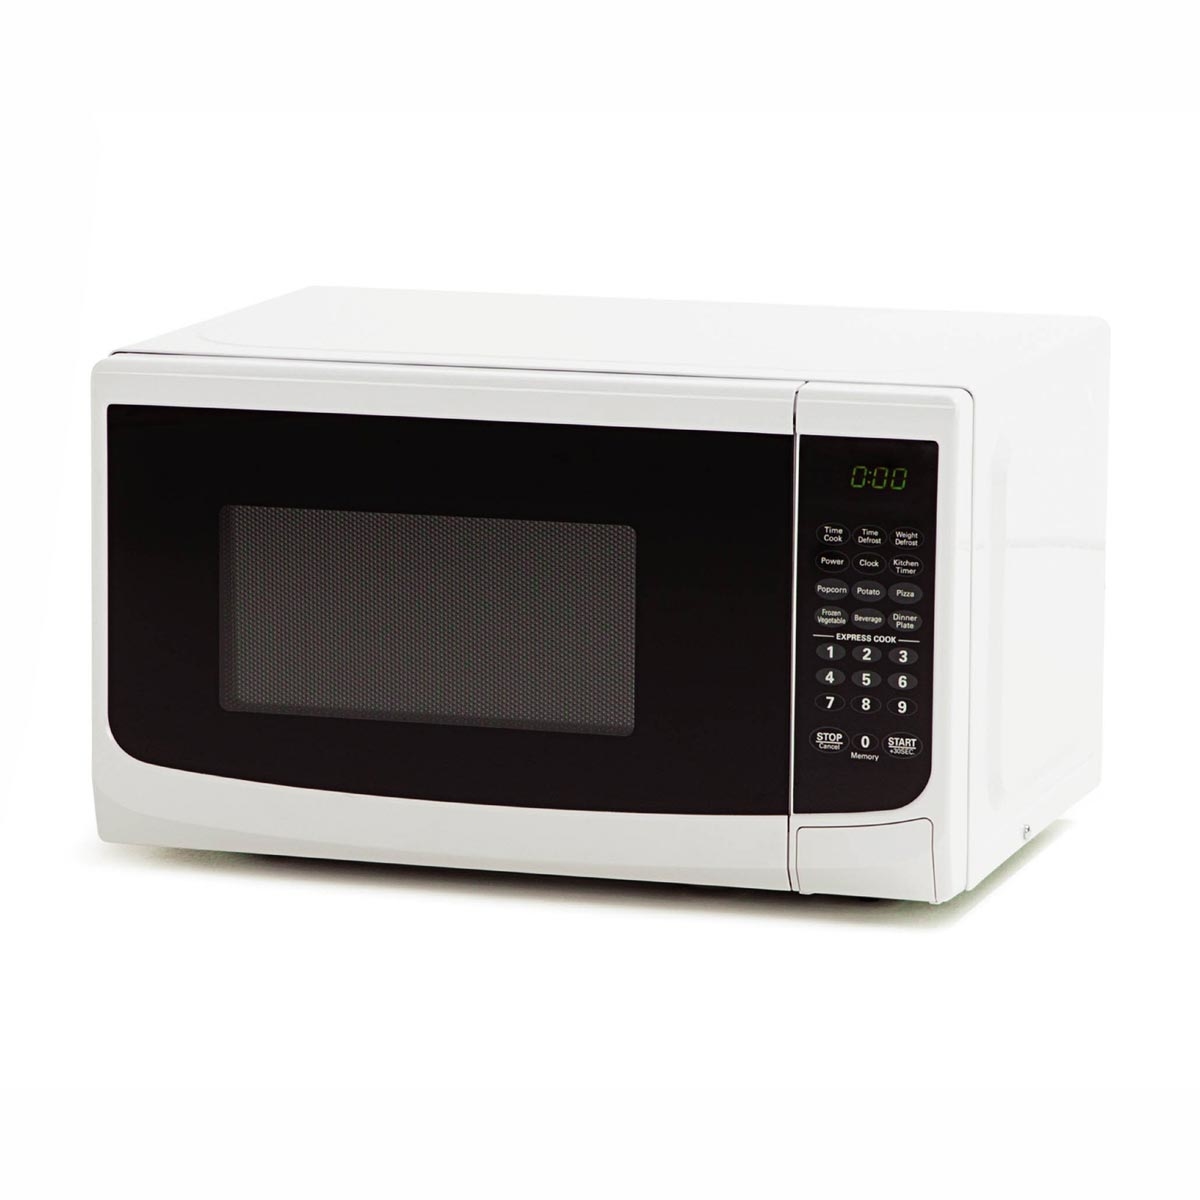 Homemaker (Kmart) 20L Microwave Reviews